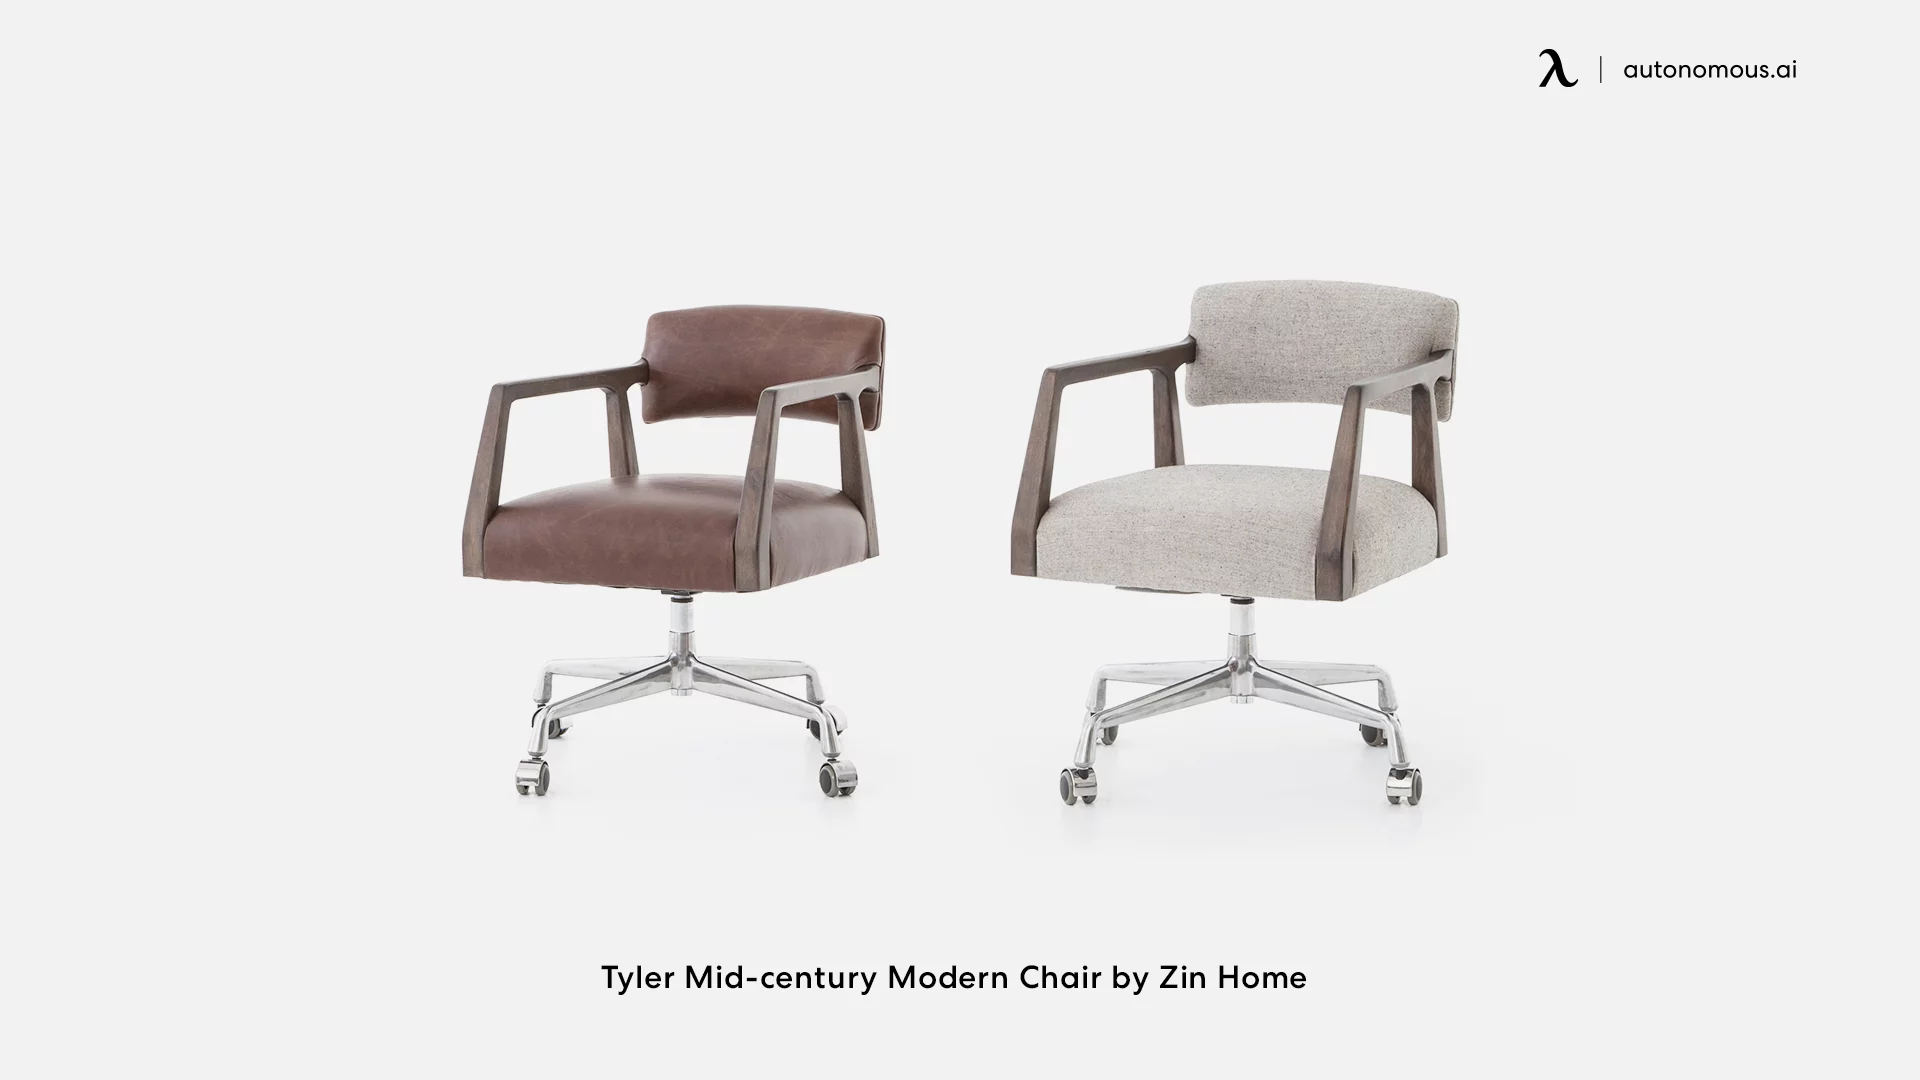 Tyler Mid-century Modern Chair by Zin Home